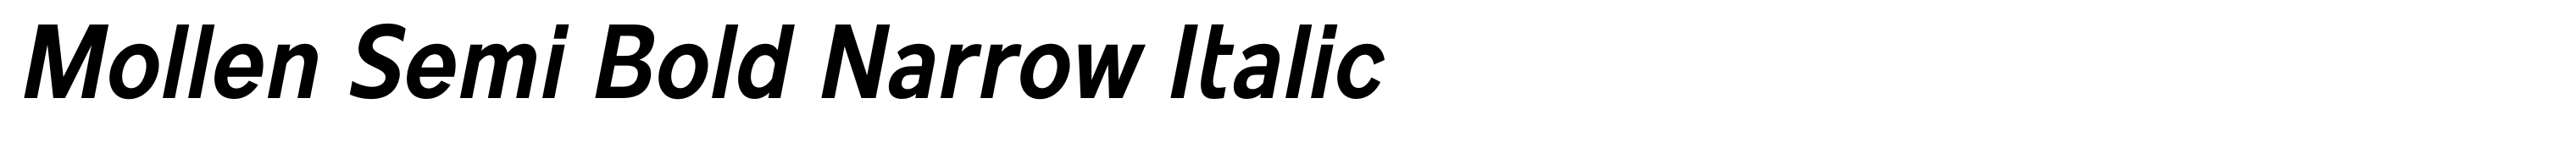 Mollen Semi Bold Narrow Italic